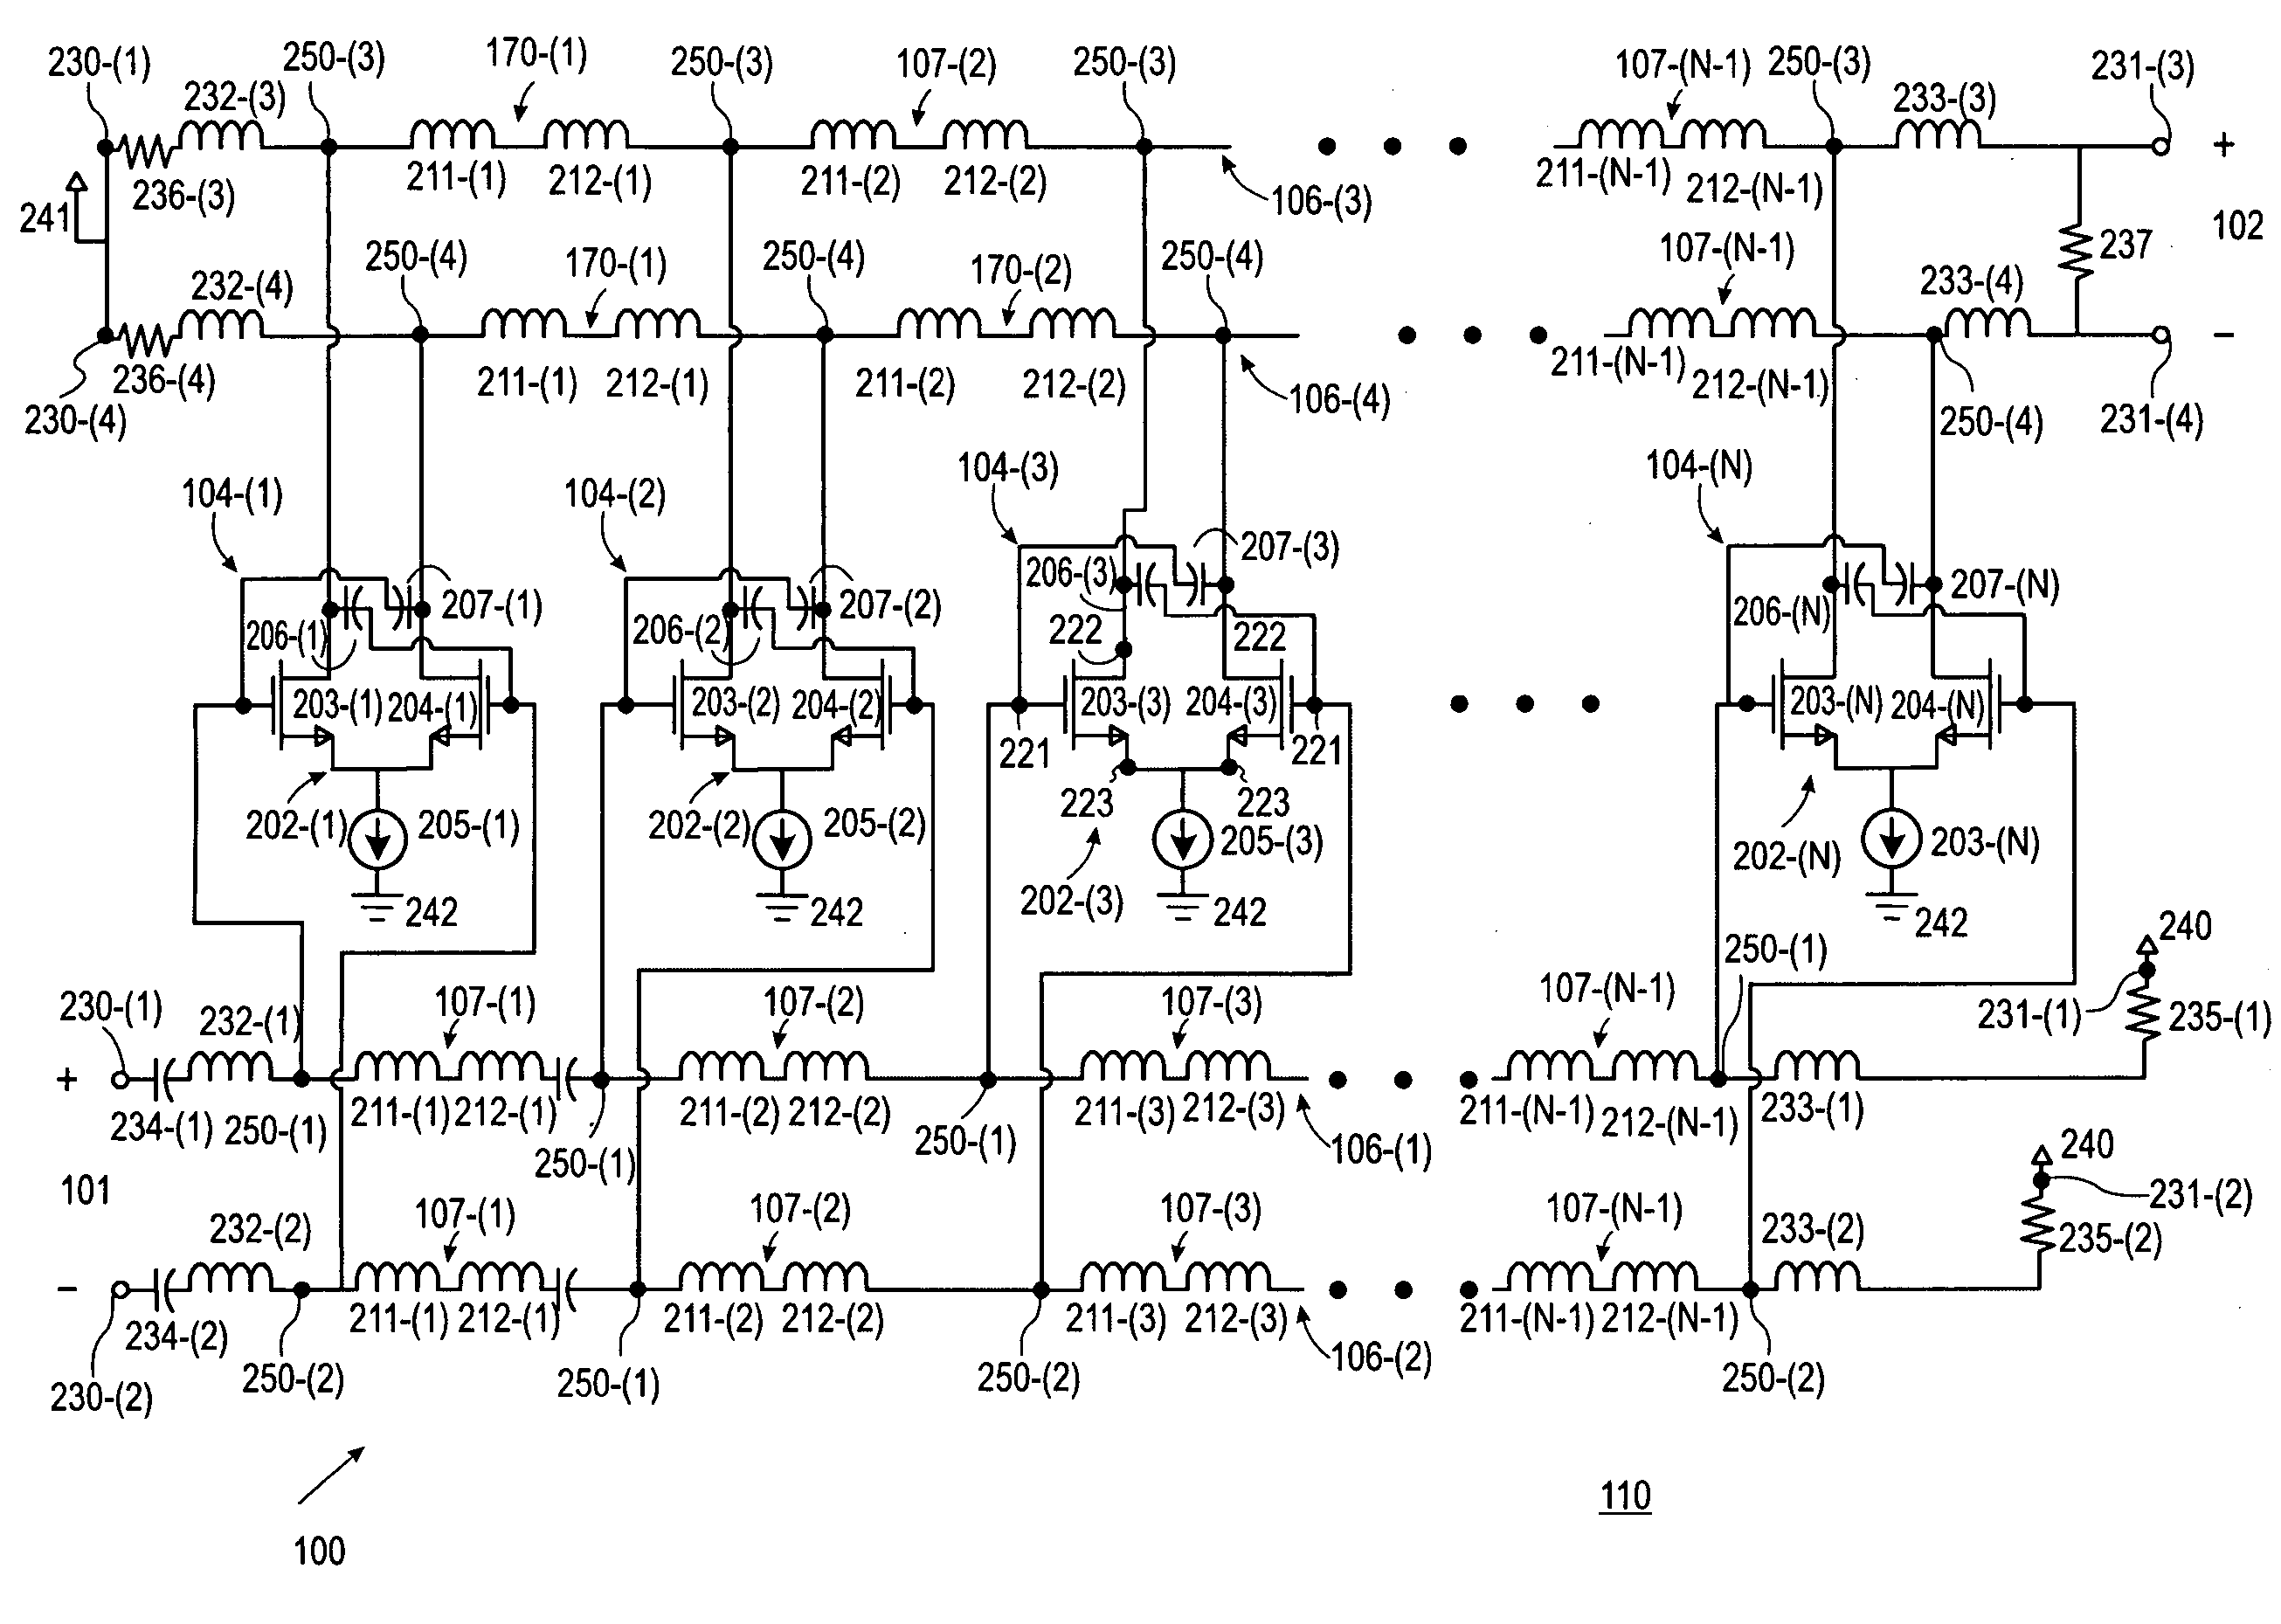 Non-uniform distributed multi-stage circuits